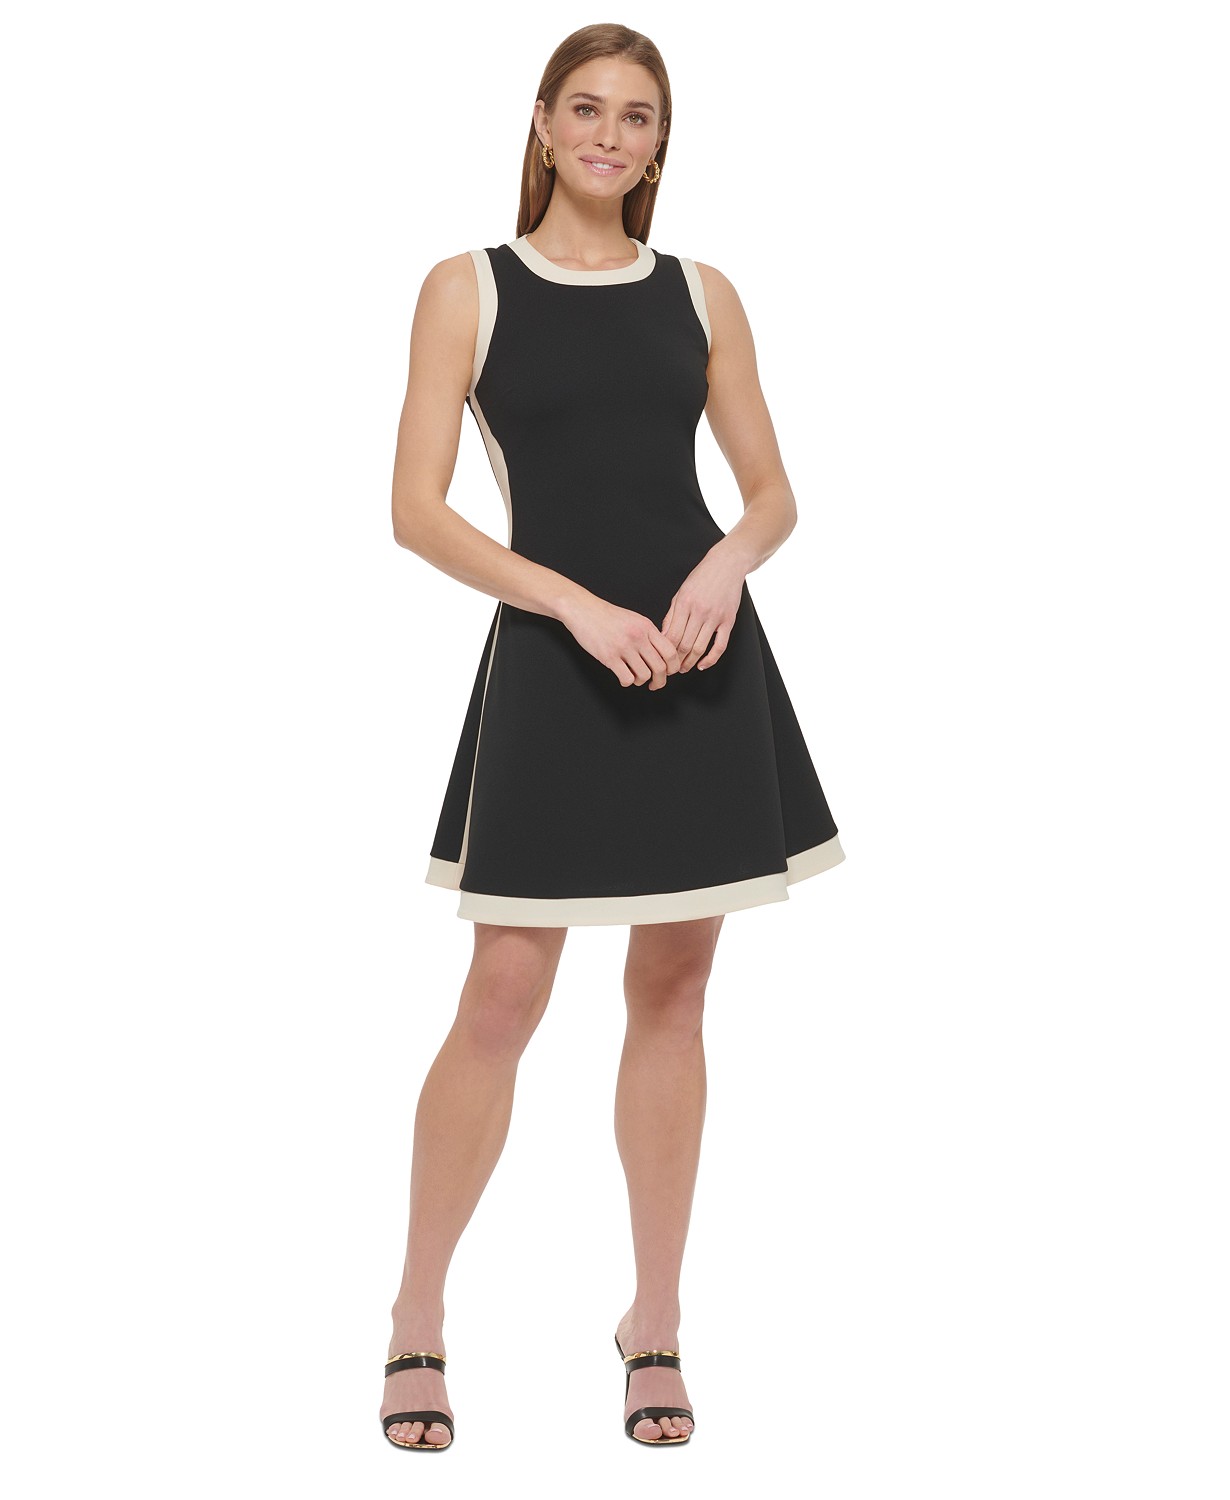 Petite Sleeveless Contrast-Trimmed Dress